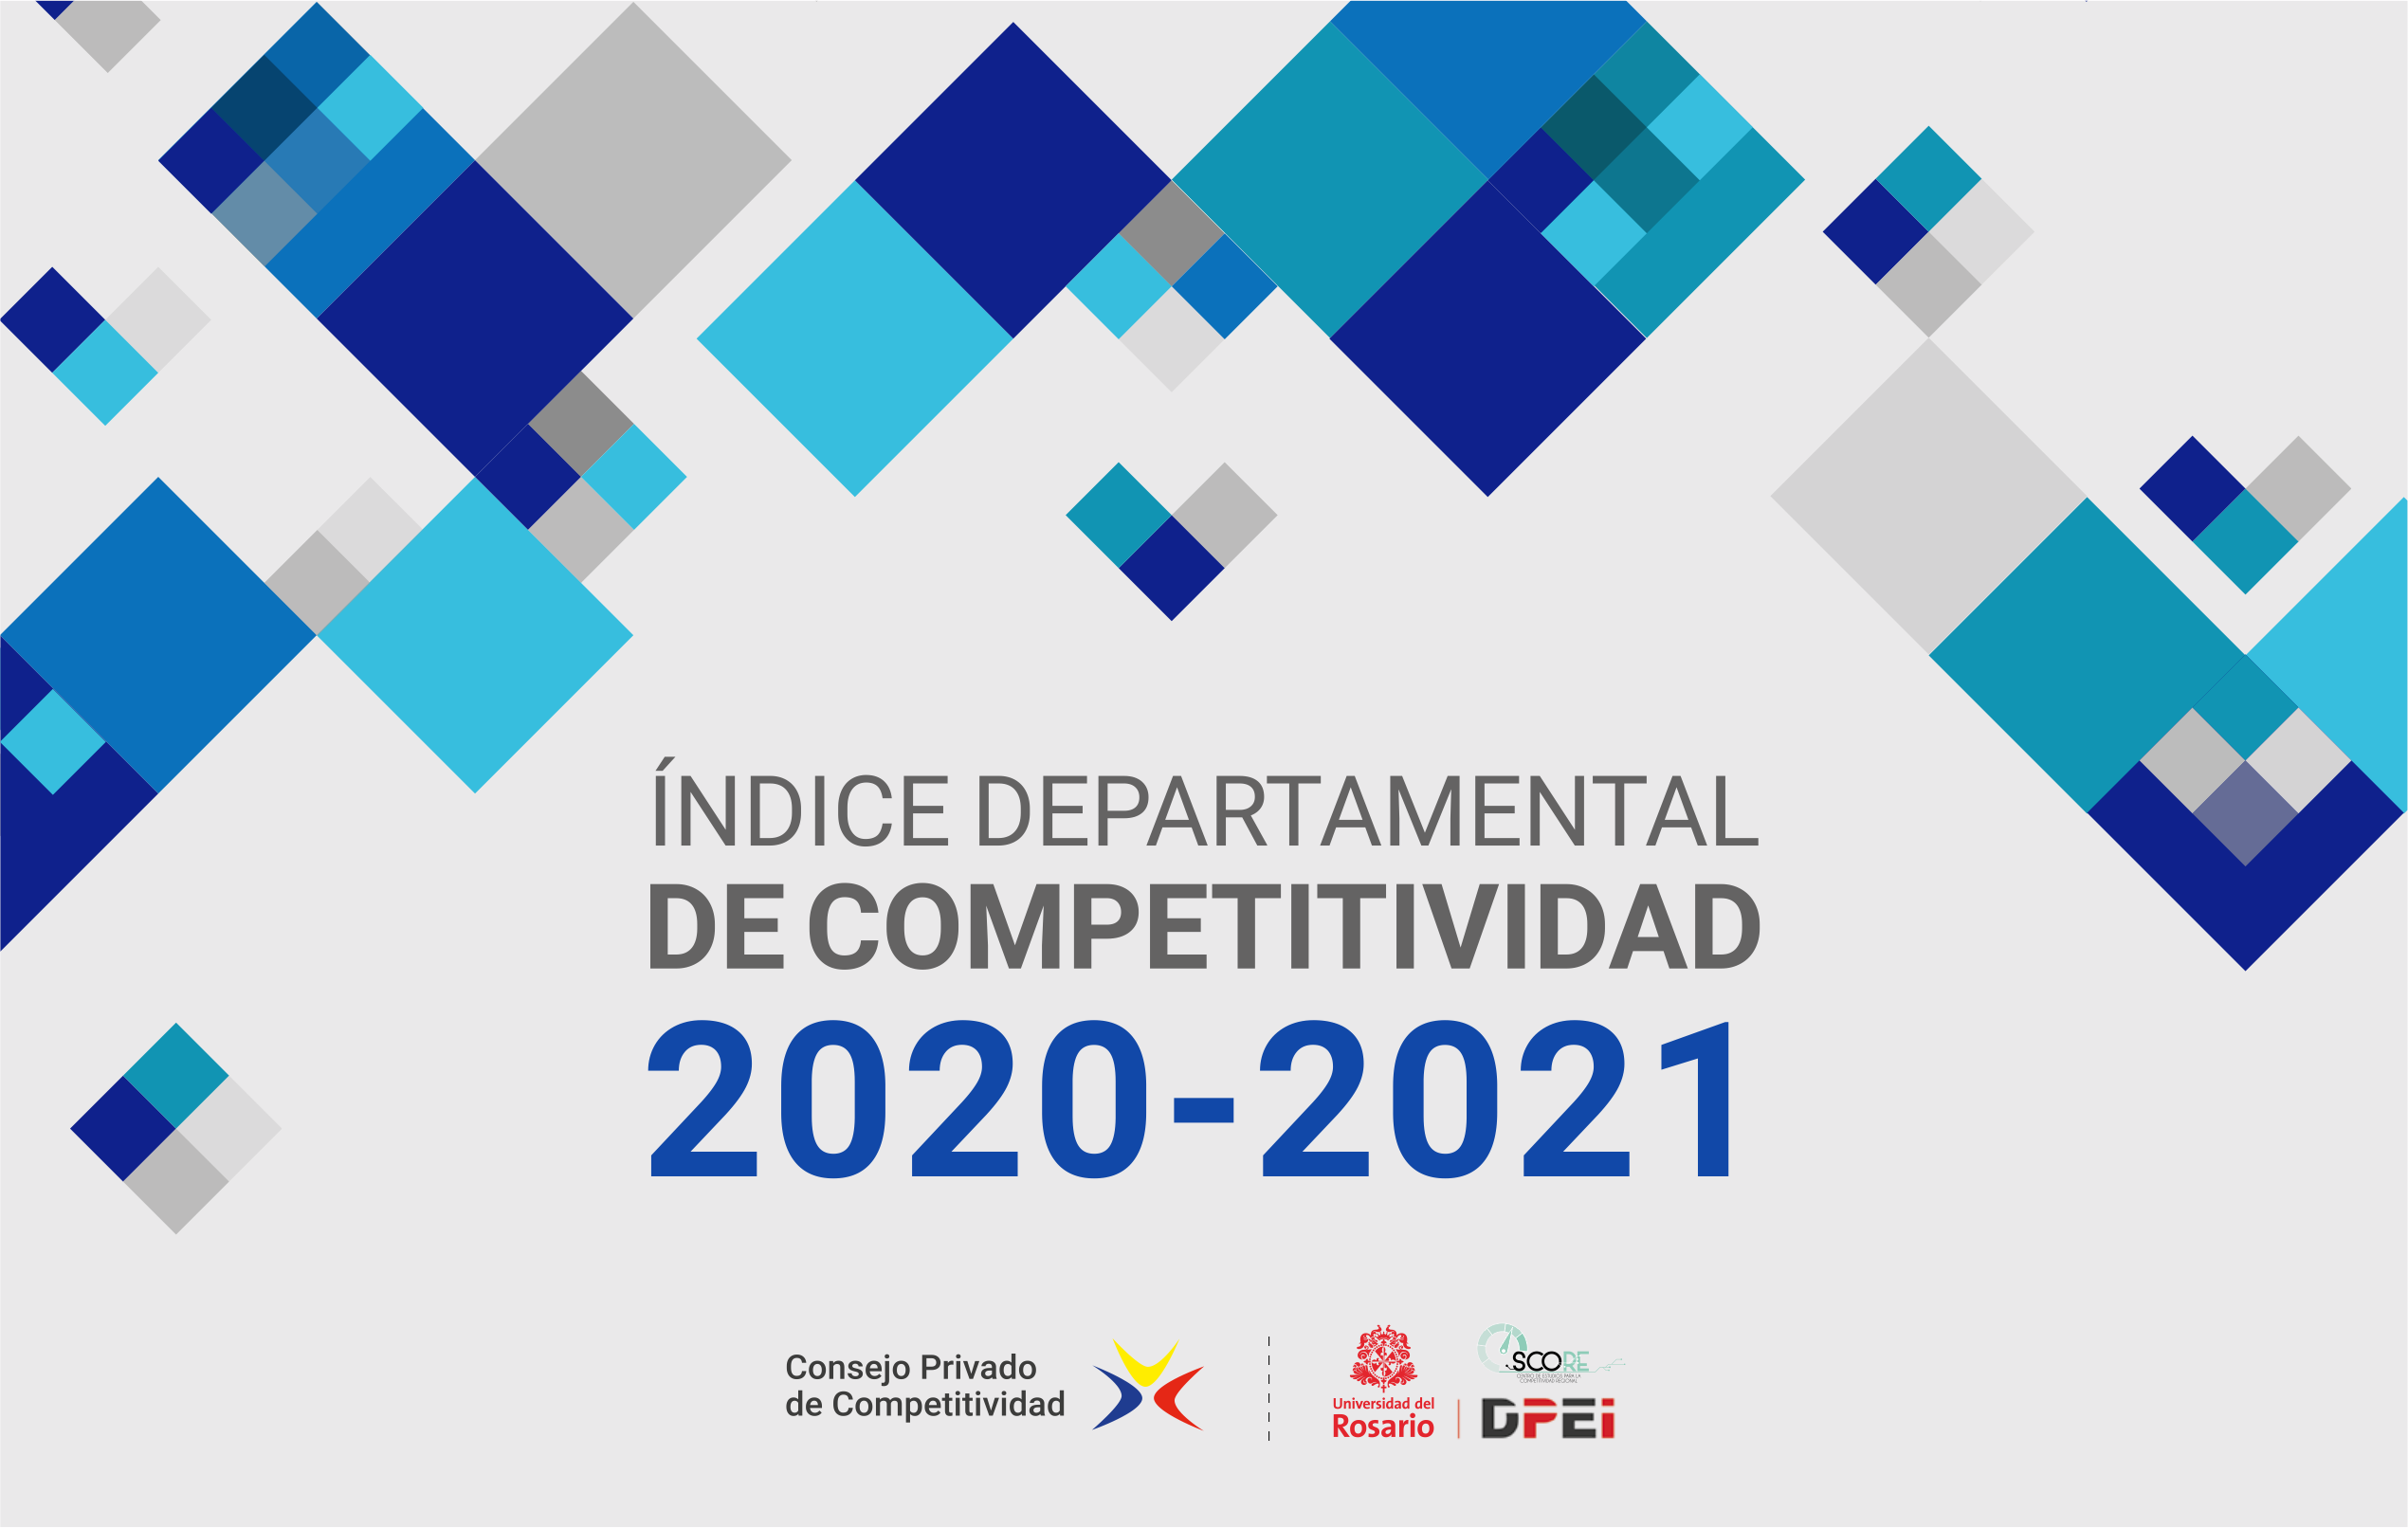 ndice de Competitividad Departamental 2020-2021